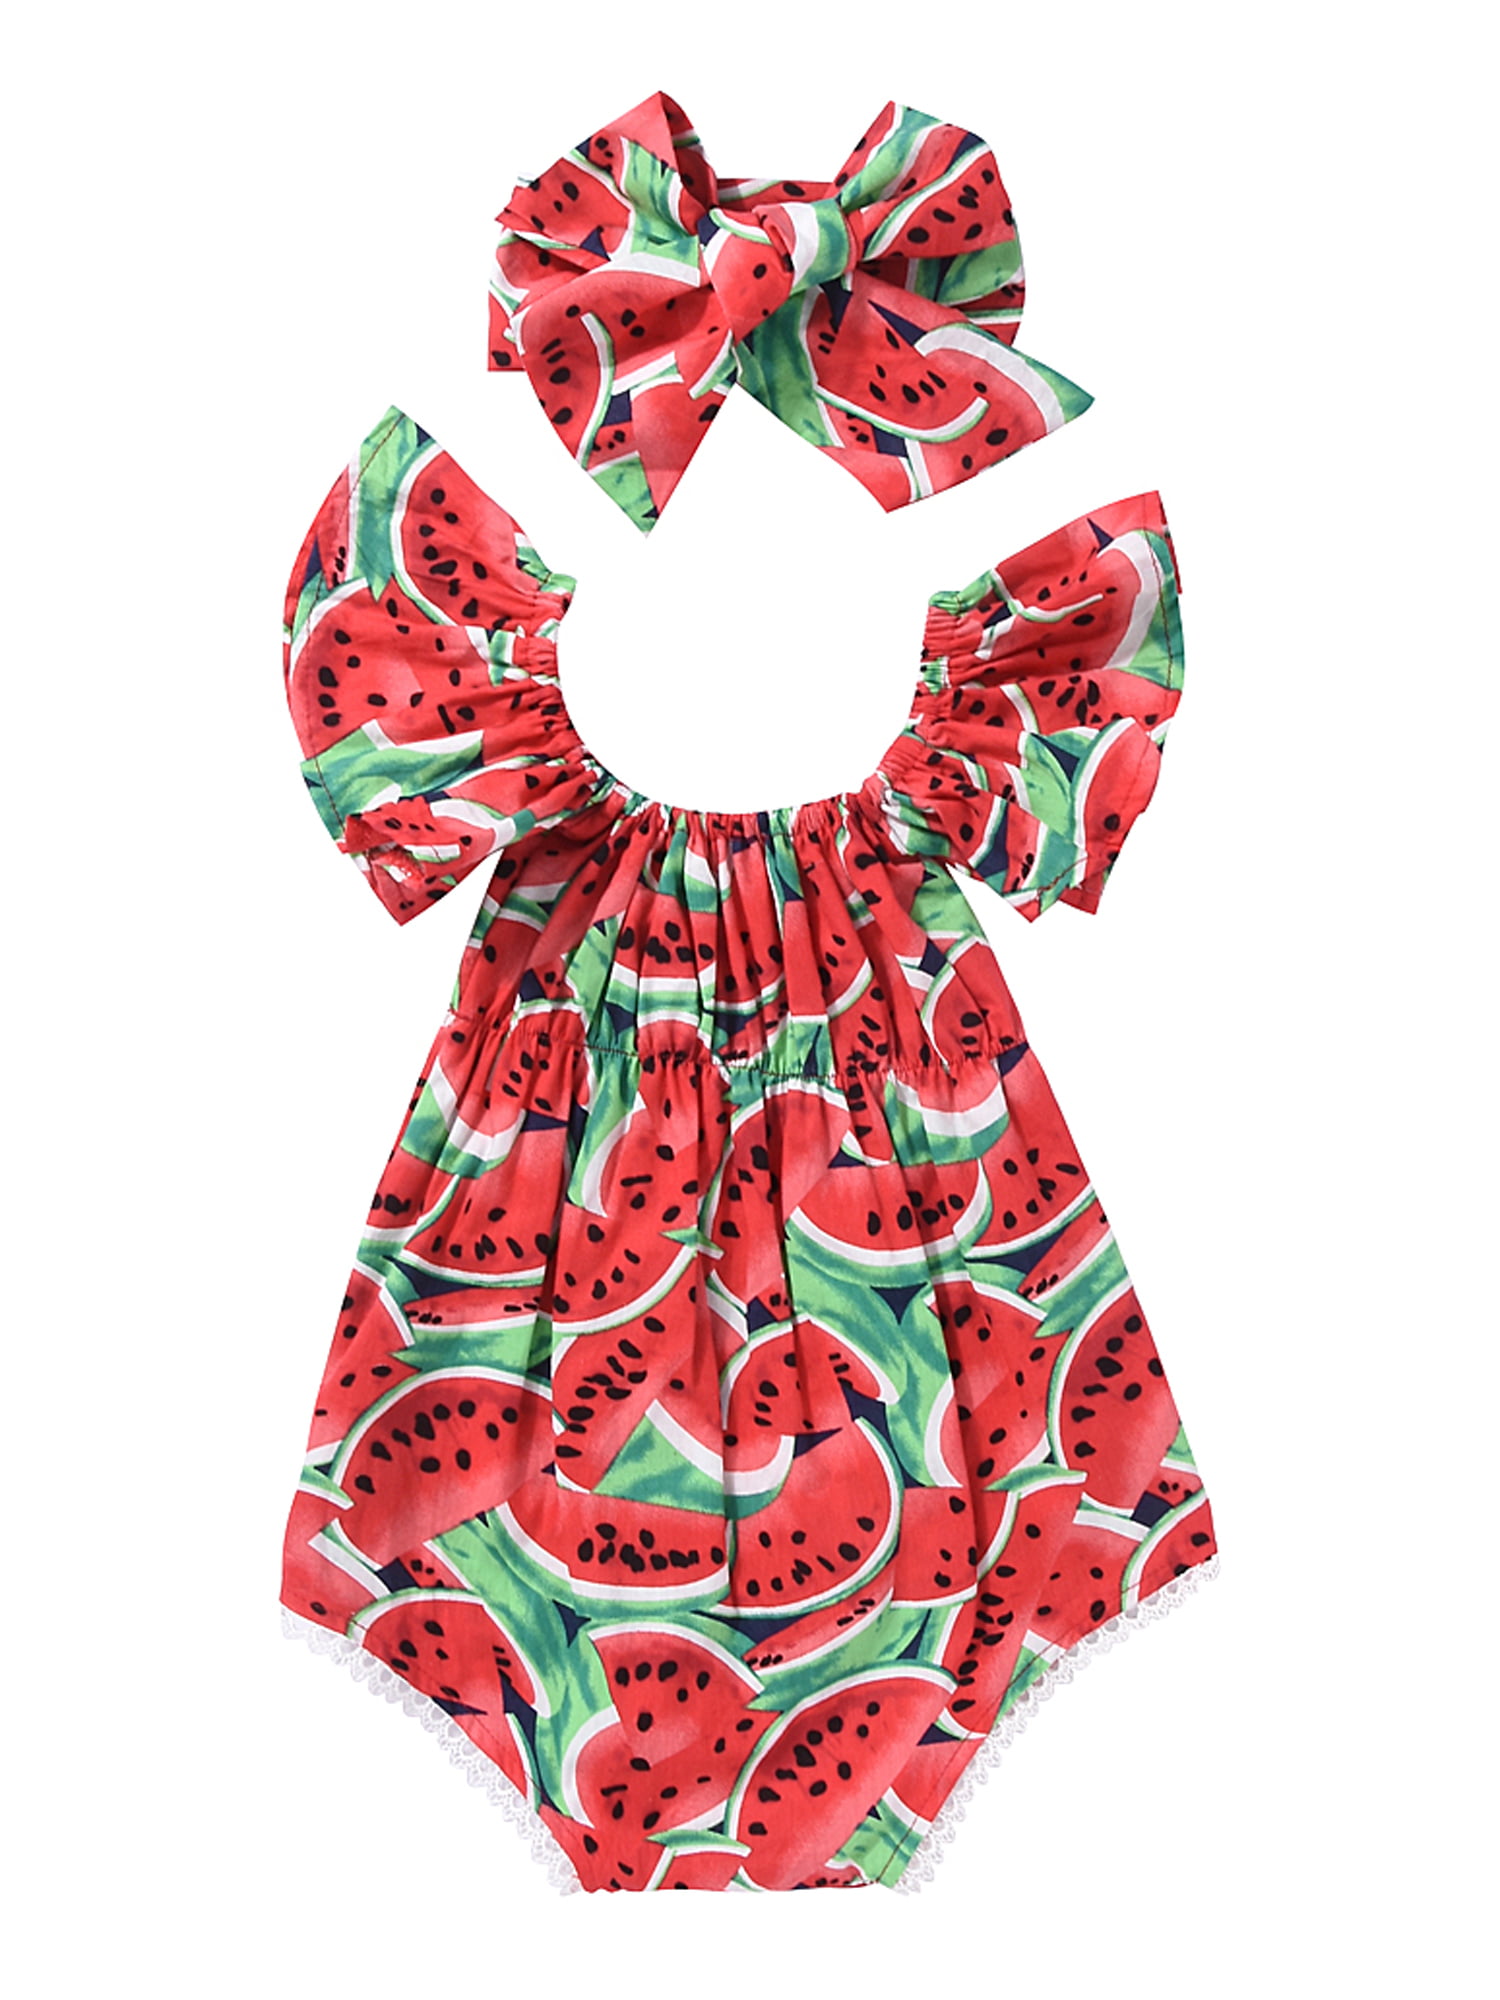 Cute newborn baby girls romper watermelon clothes jumpsuit 